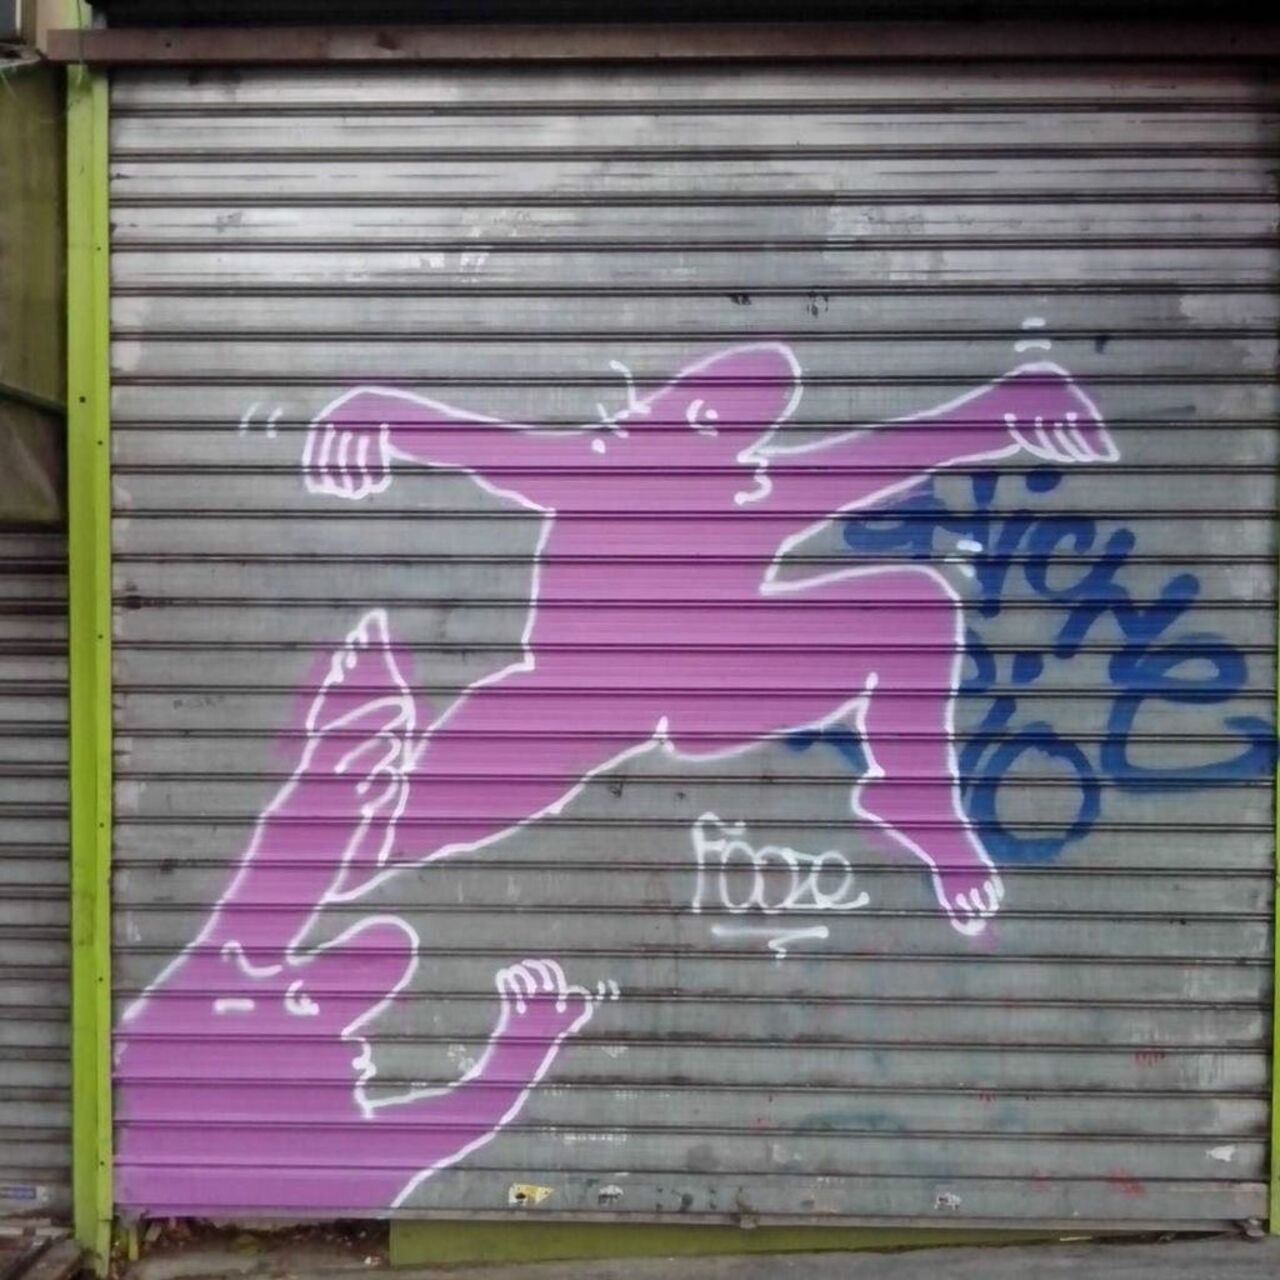 #streetart #streetarteverywhere #streetshot #graffitiart #graffiti #arturbain #urbanart  #rideaudefer #stencil #spr… https://t.co/y3PWviVQiY